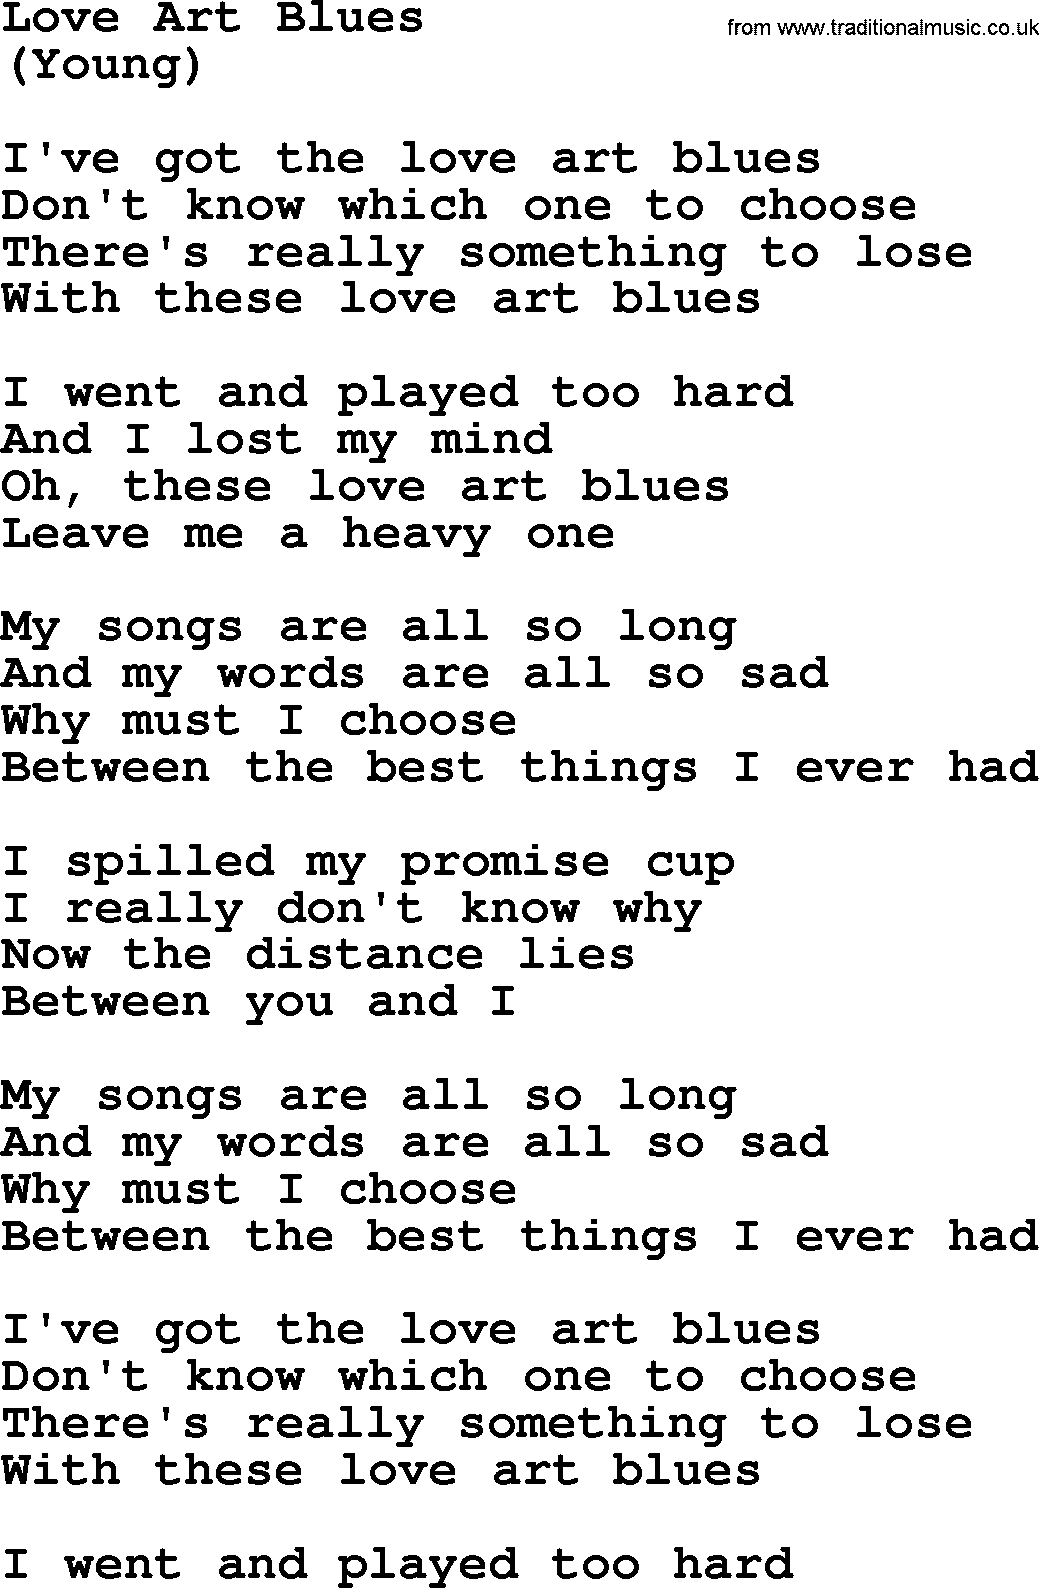 The Byrds song Love Art Blues, lyrics